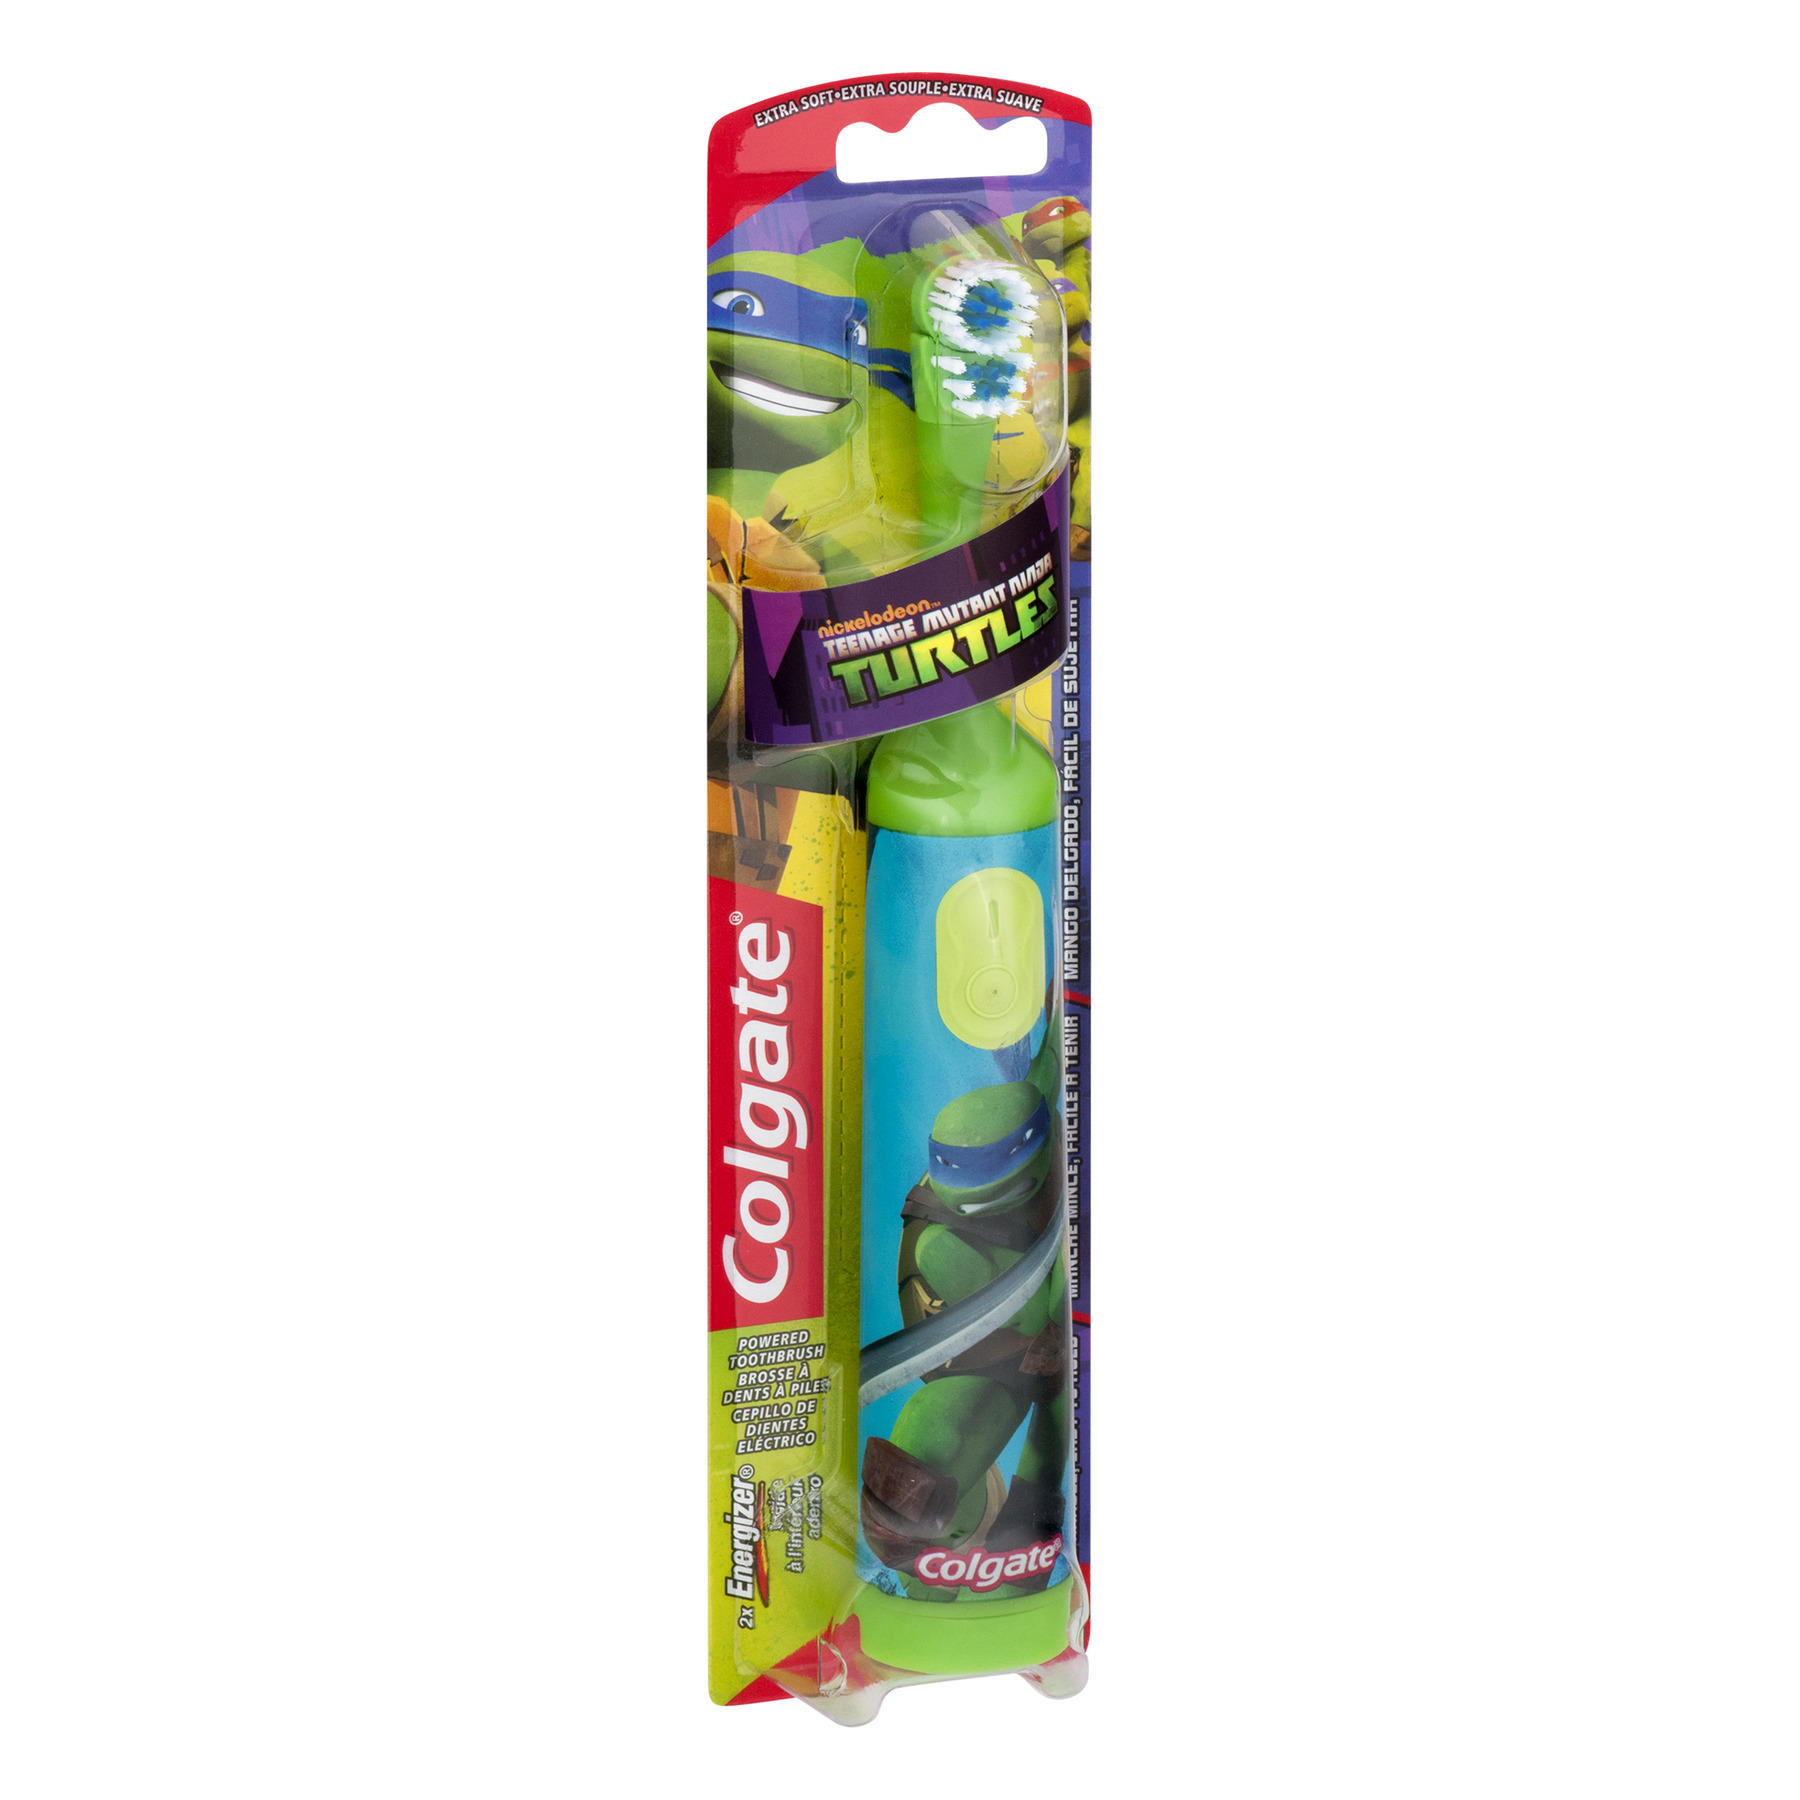 Colgate Kids Teenage Mutant Ninja Turtles Battery Electric Toothbrush - image 5 of 6